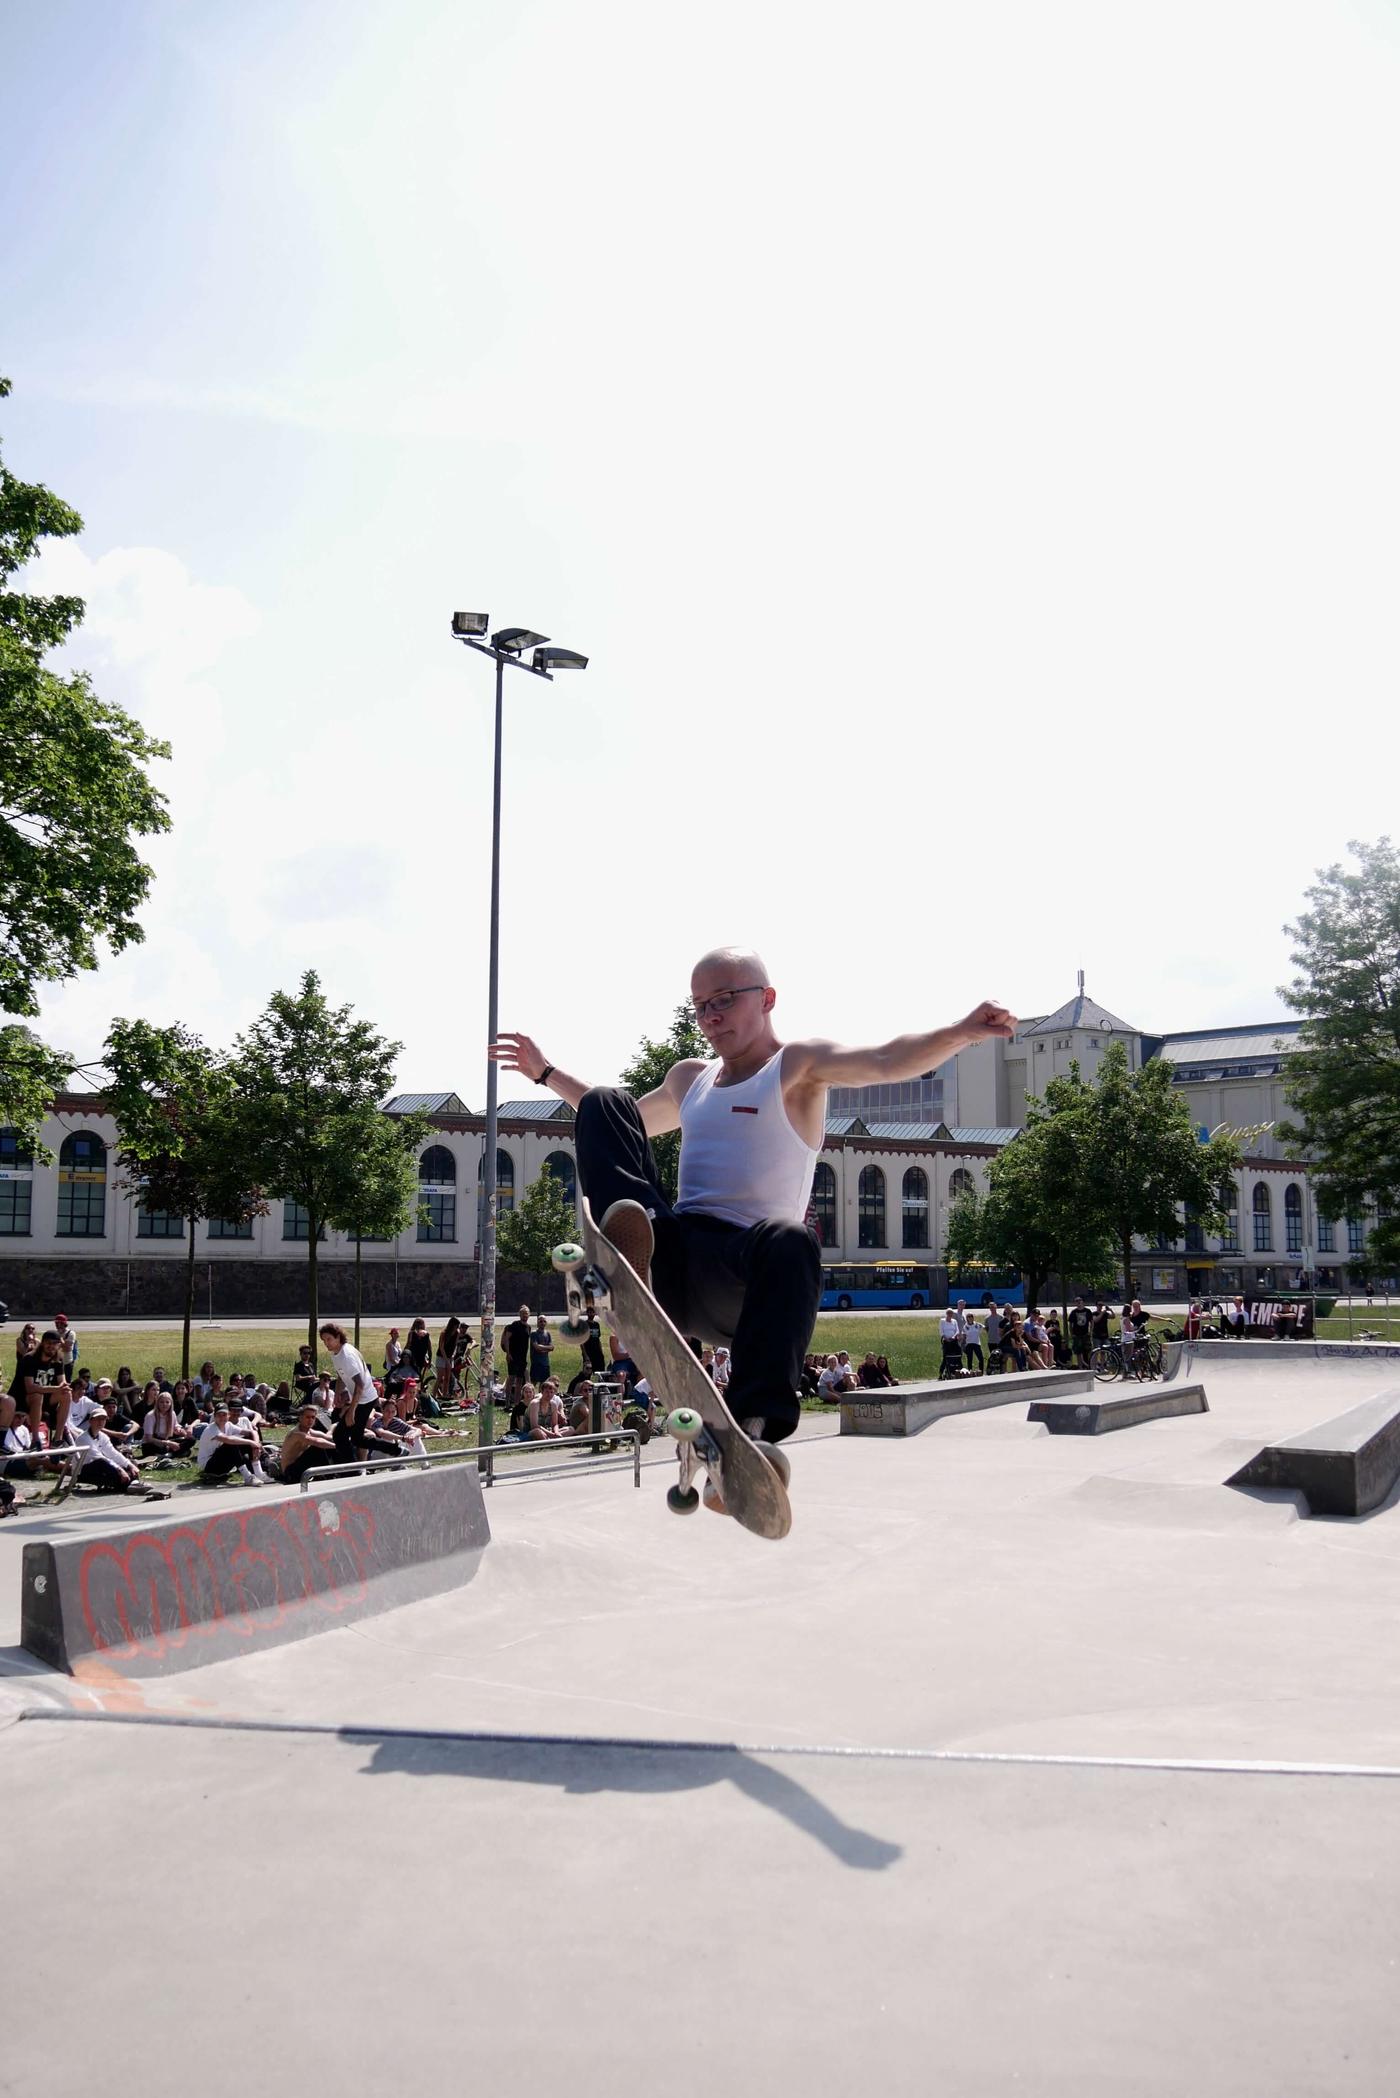 Skate-Action im urbanen Parkflair